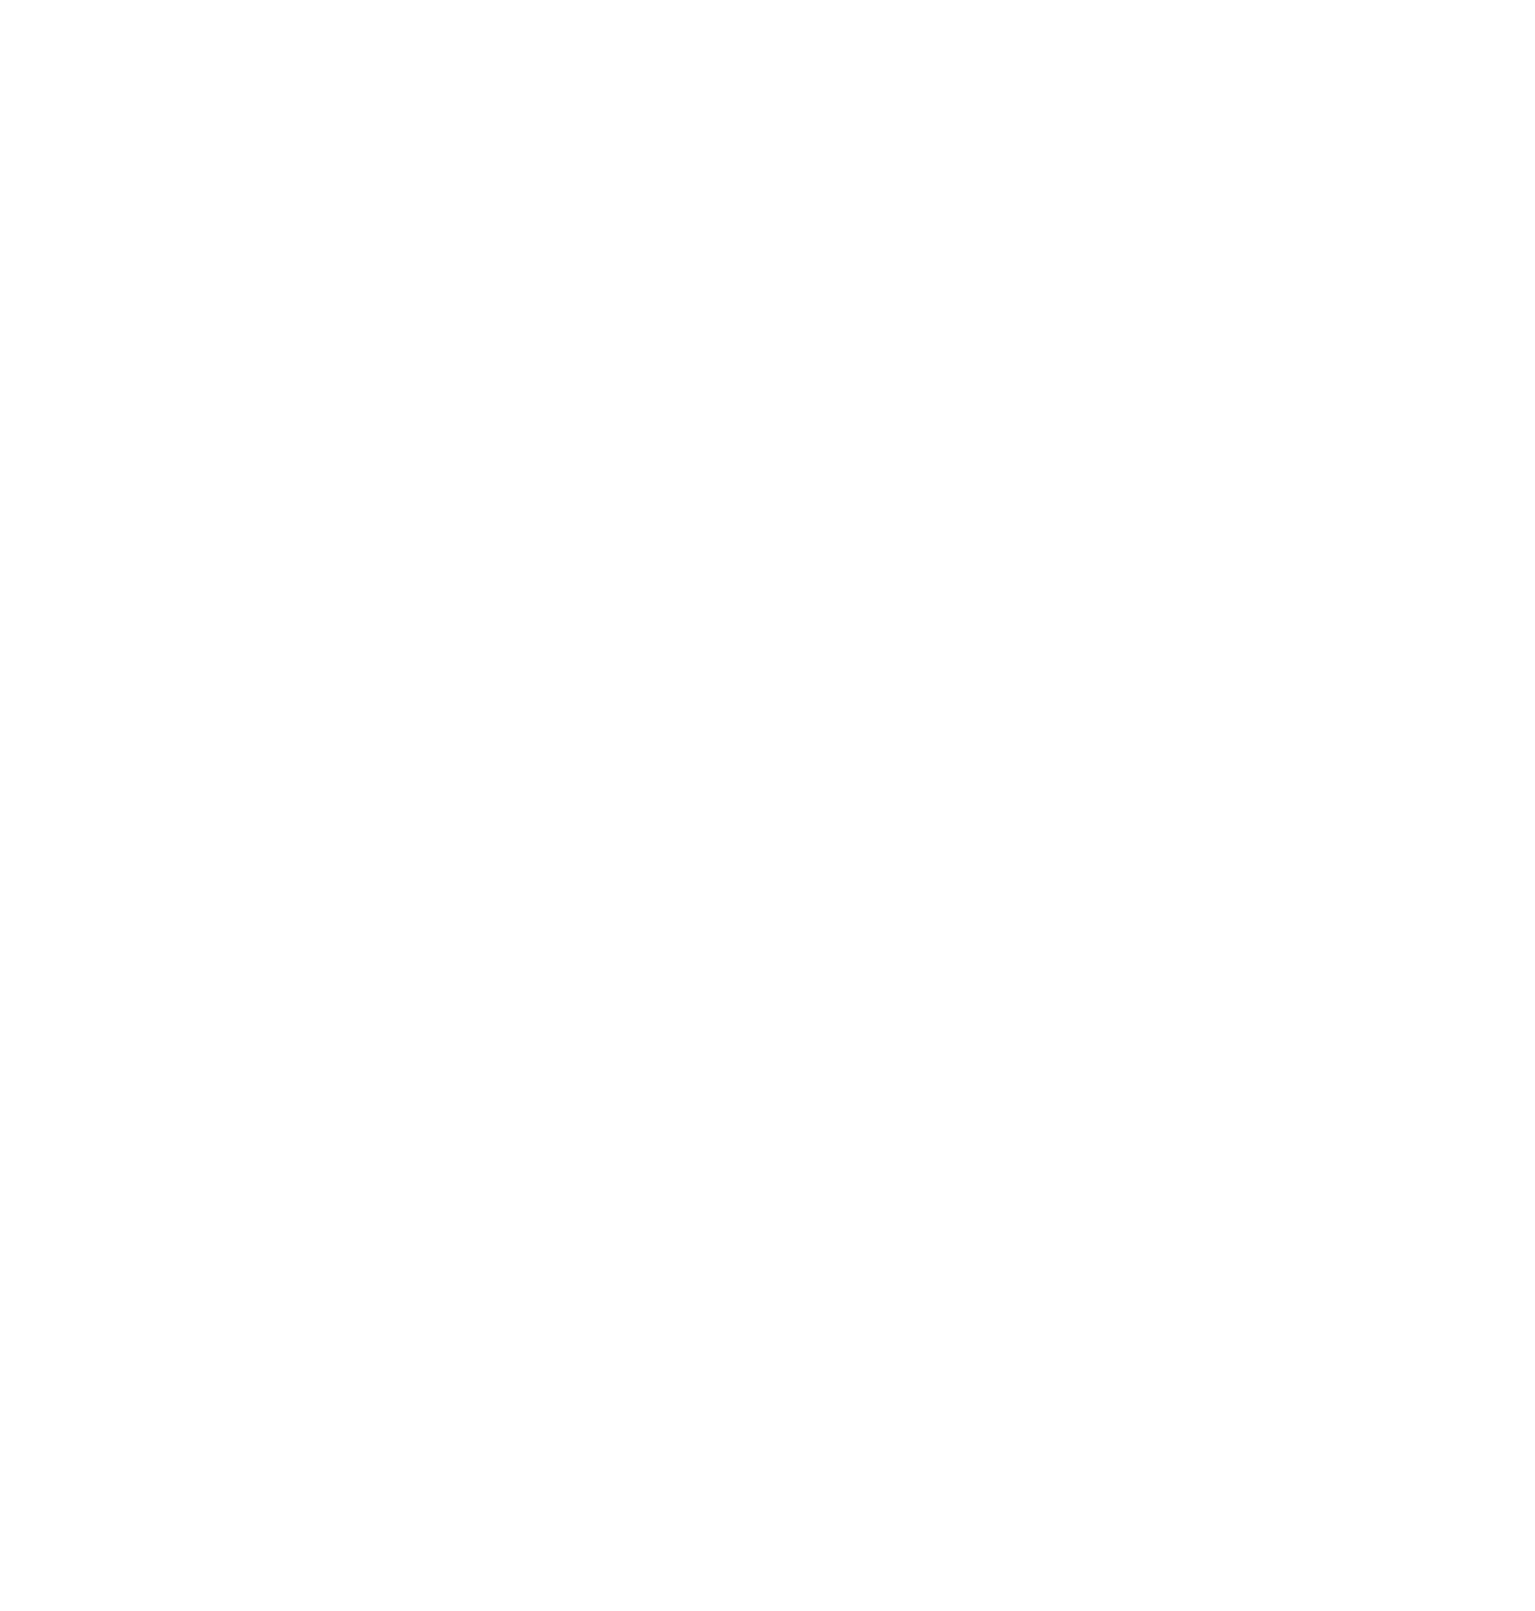 Fission Uranium logo for dark backgrounds (transparent PNG)